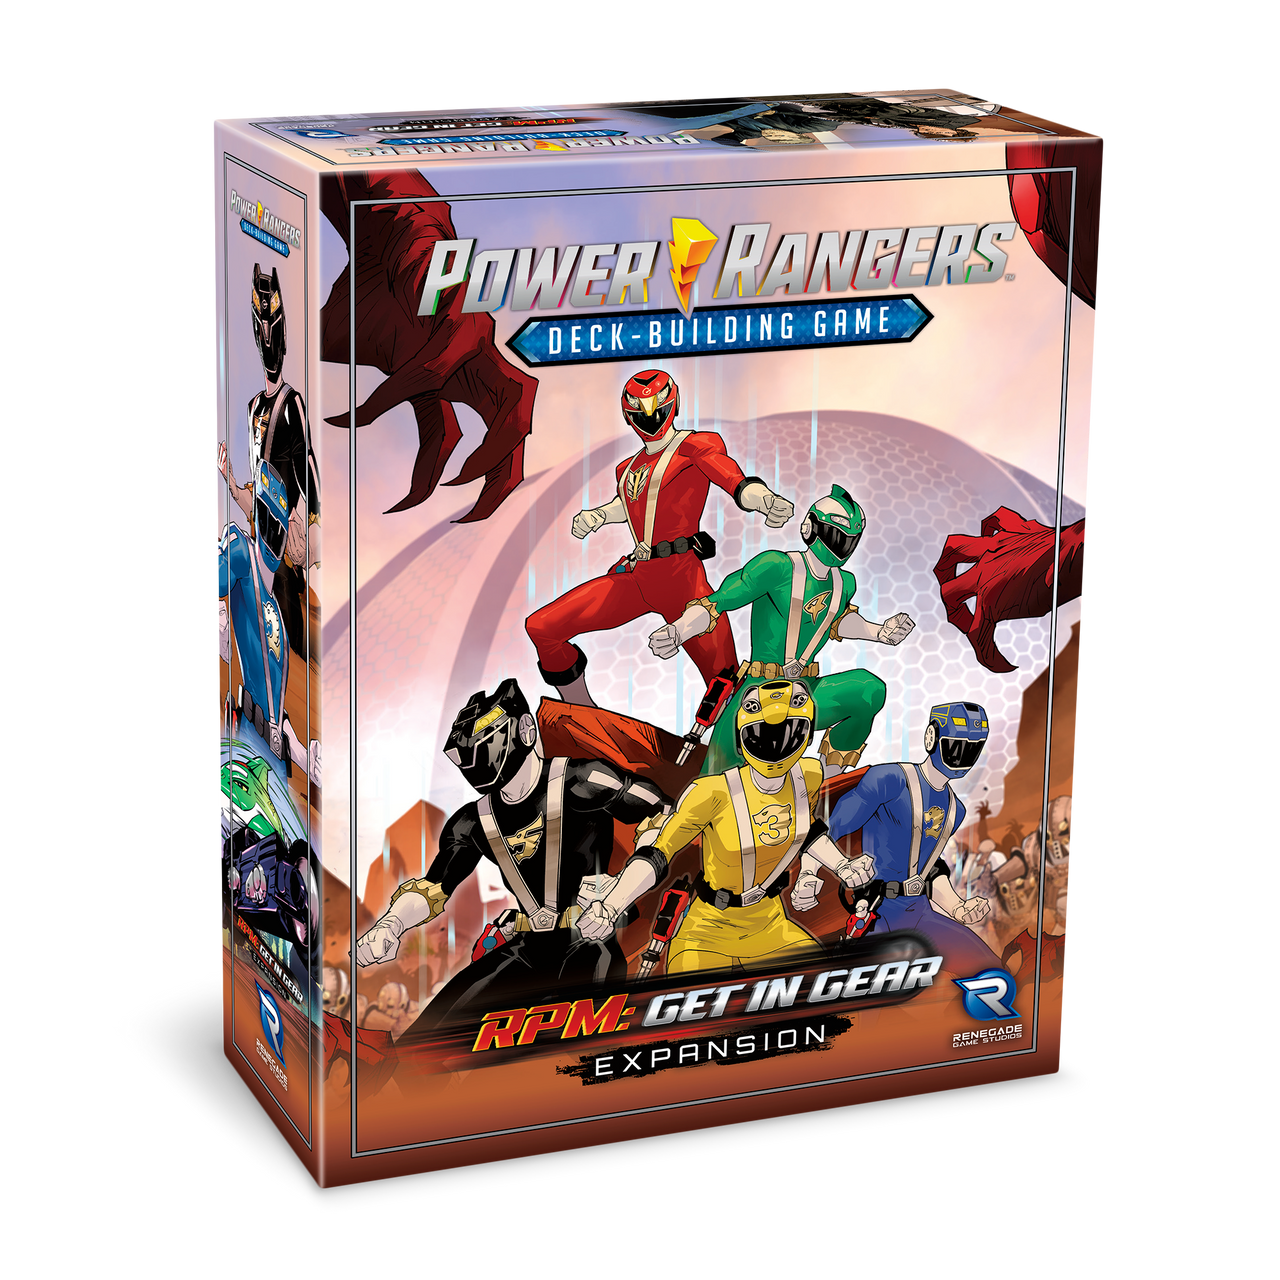 Power Rangers Deck-Building Game Omega Forever Expansion